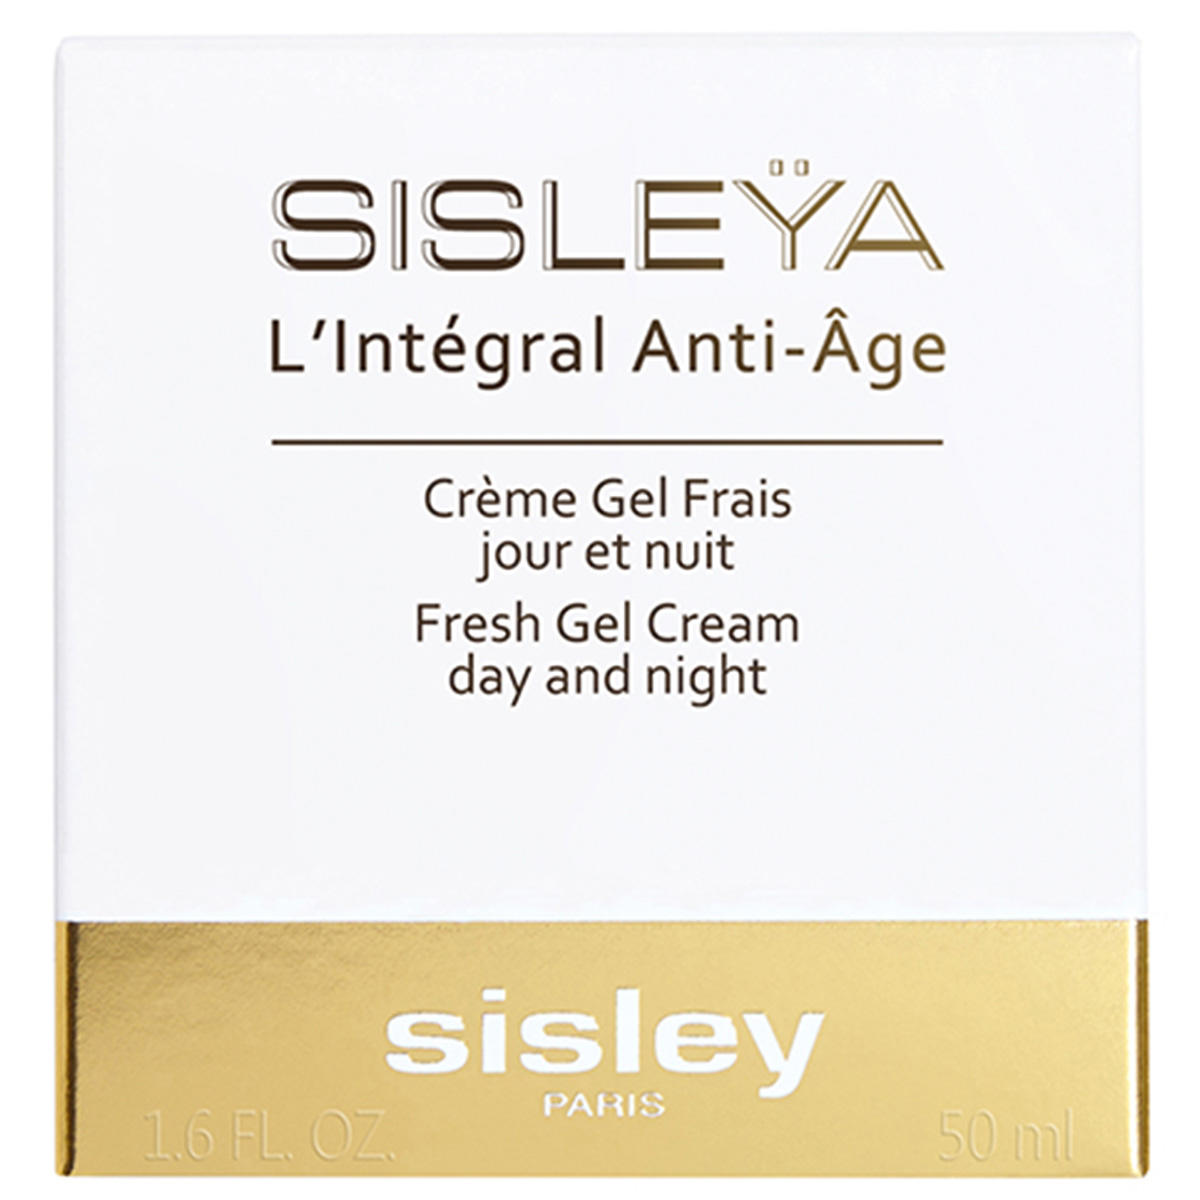 Sisley Paris Sisleÿa L'Intégral Anti-Âge Crème Gel Frais 50 ml - 2